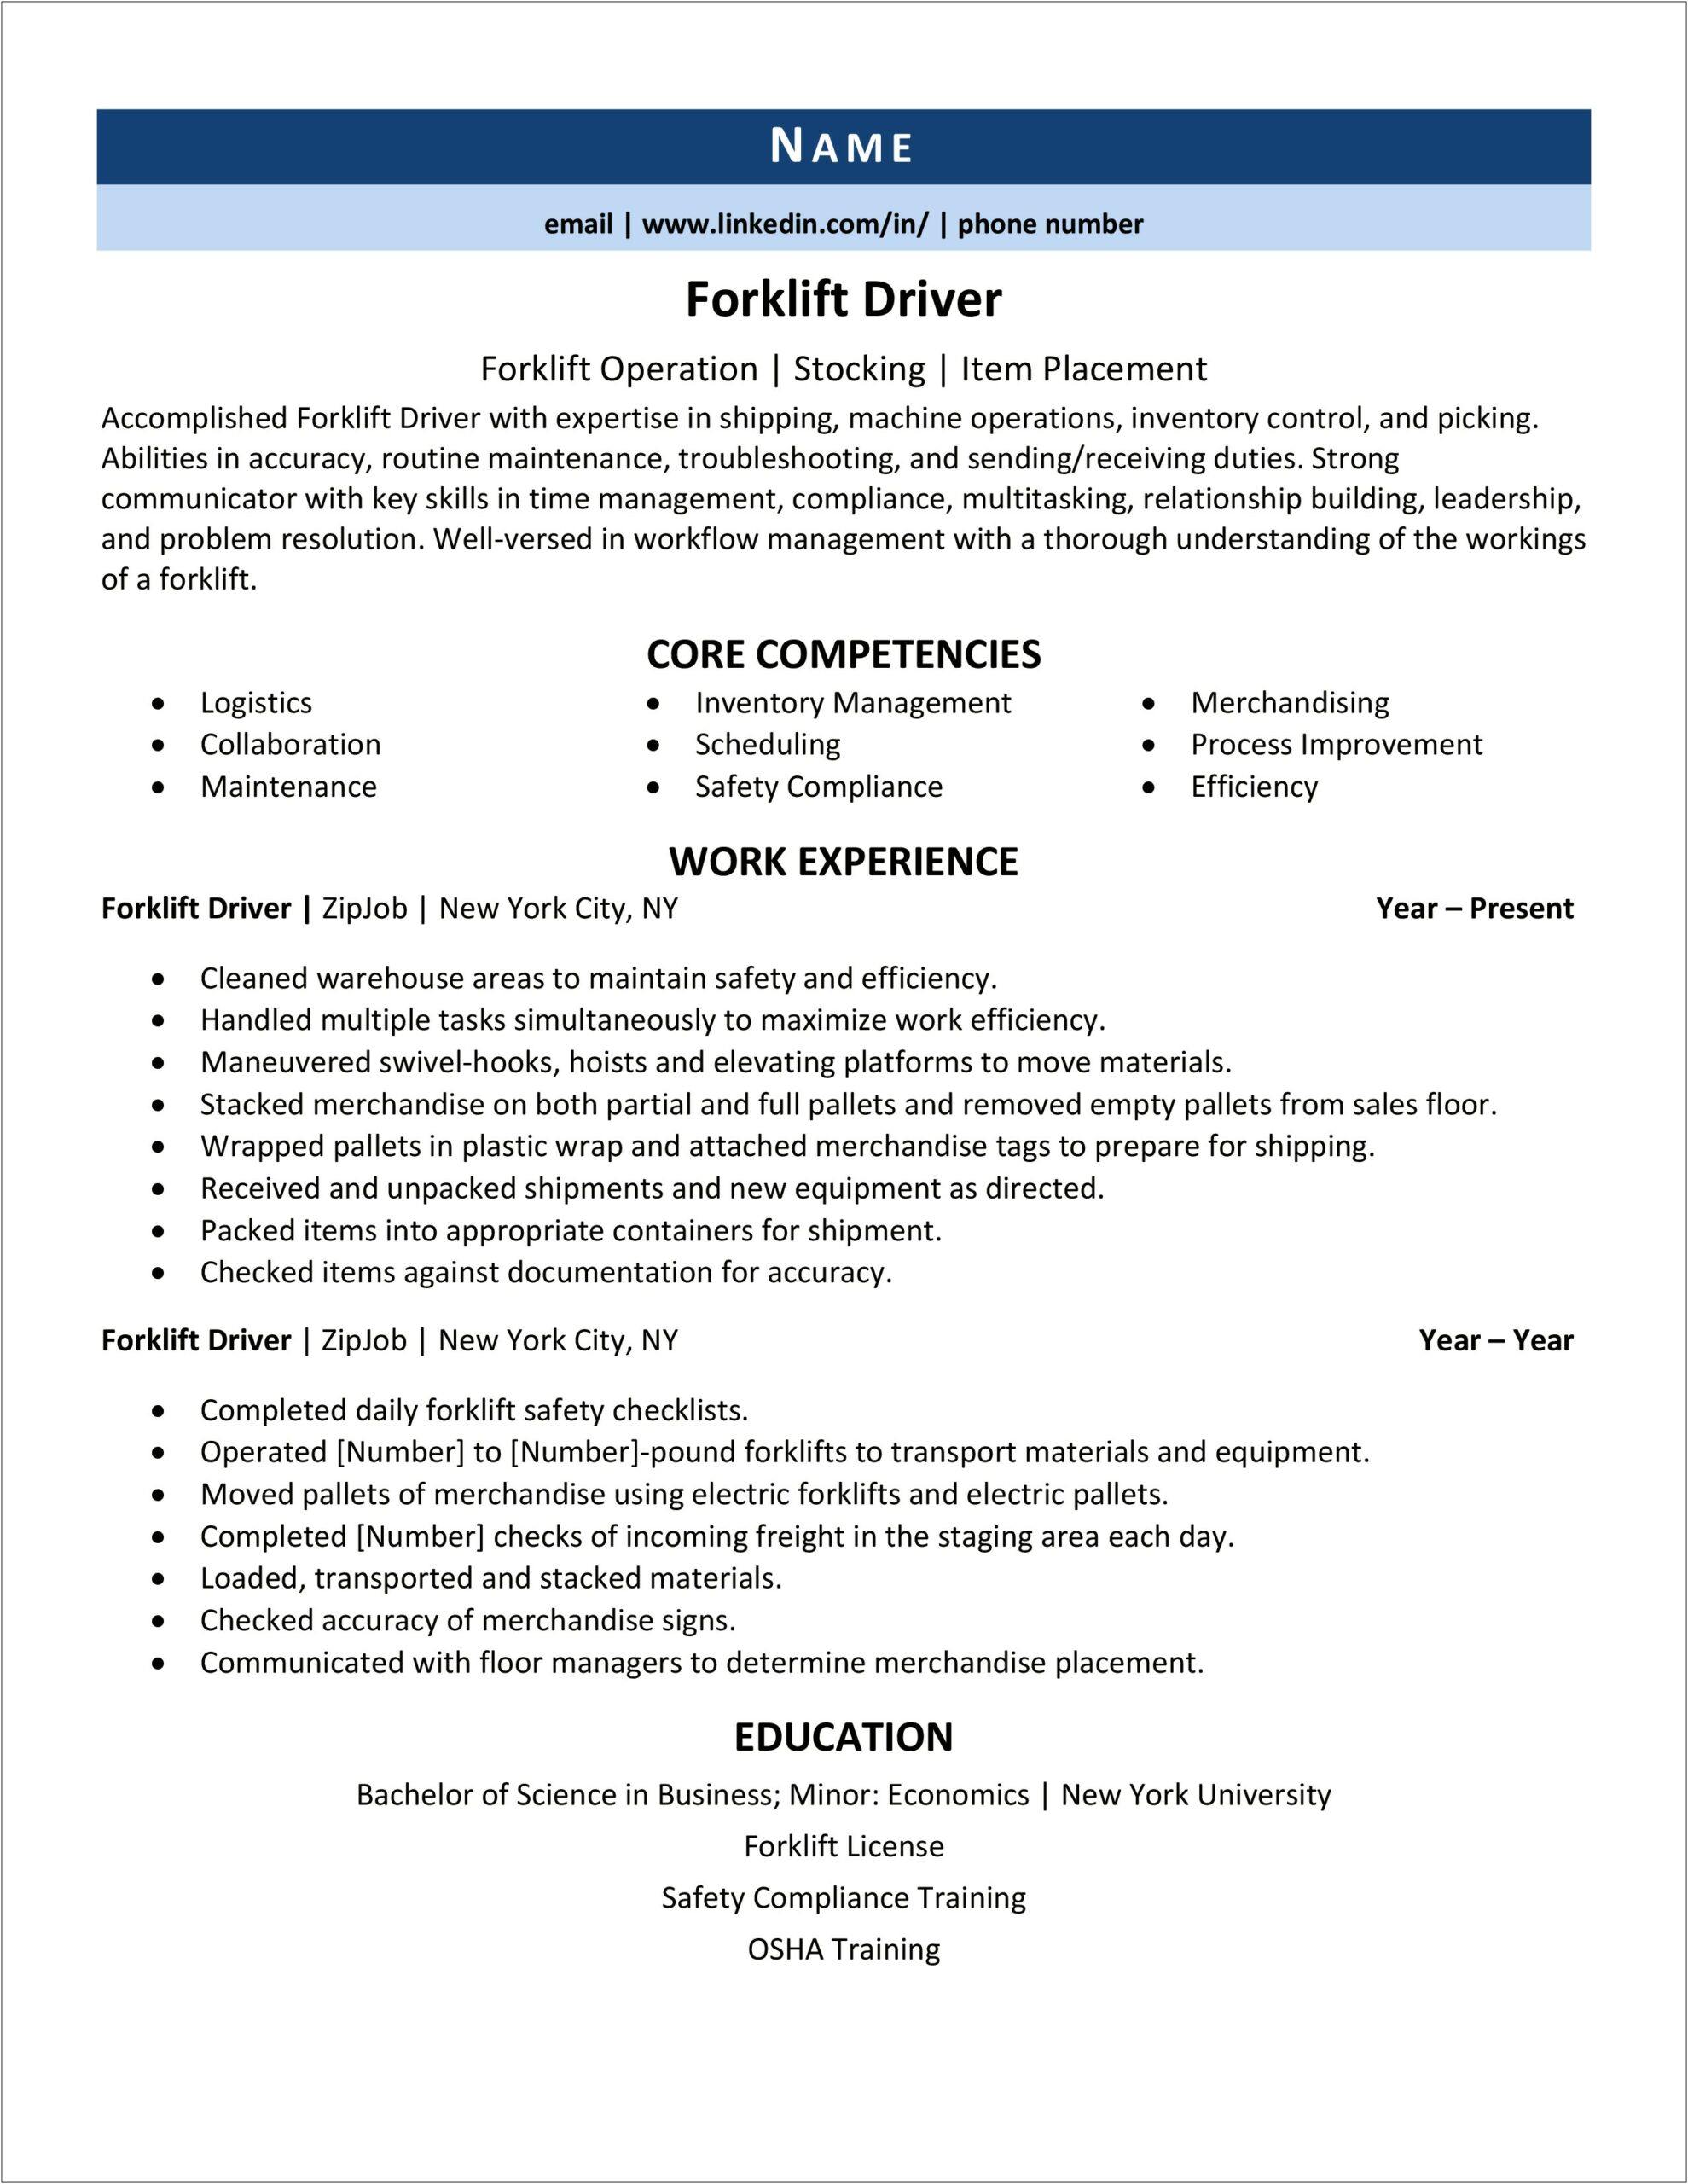 Warehouse Forklift Operator Job Description Resume